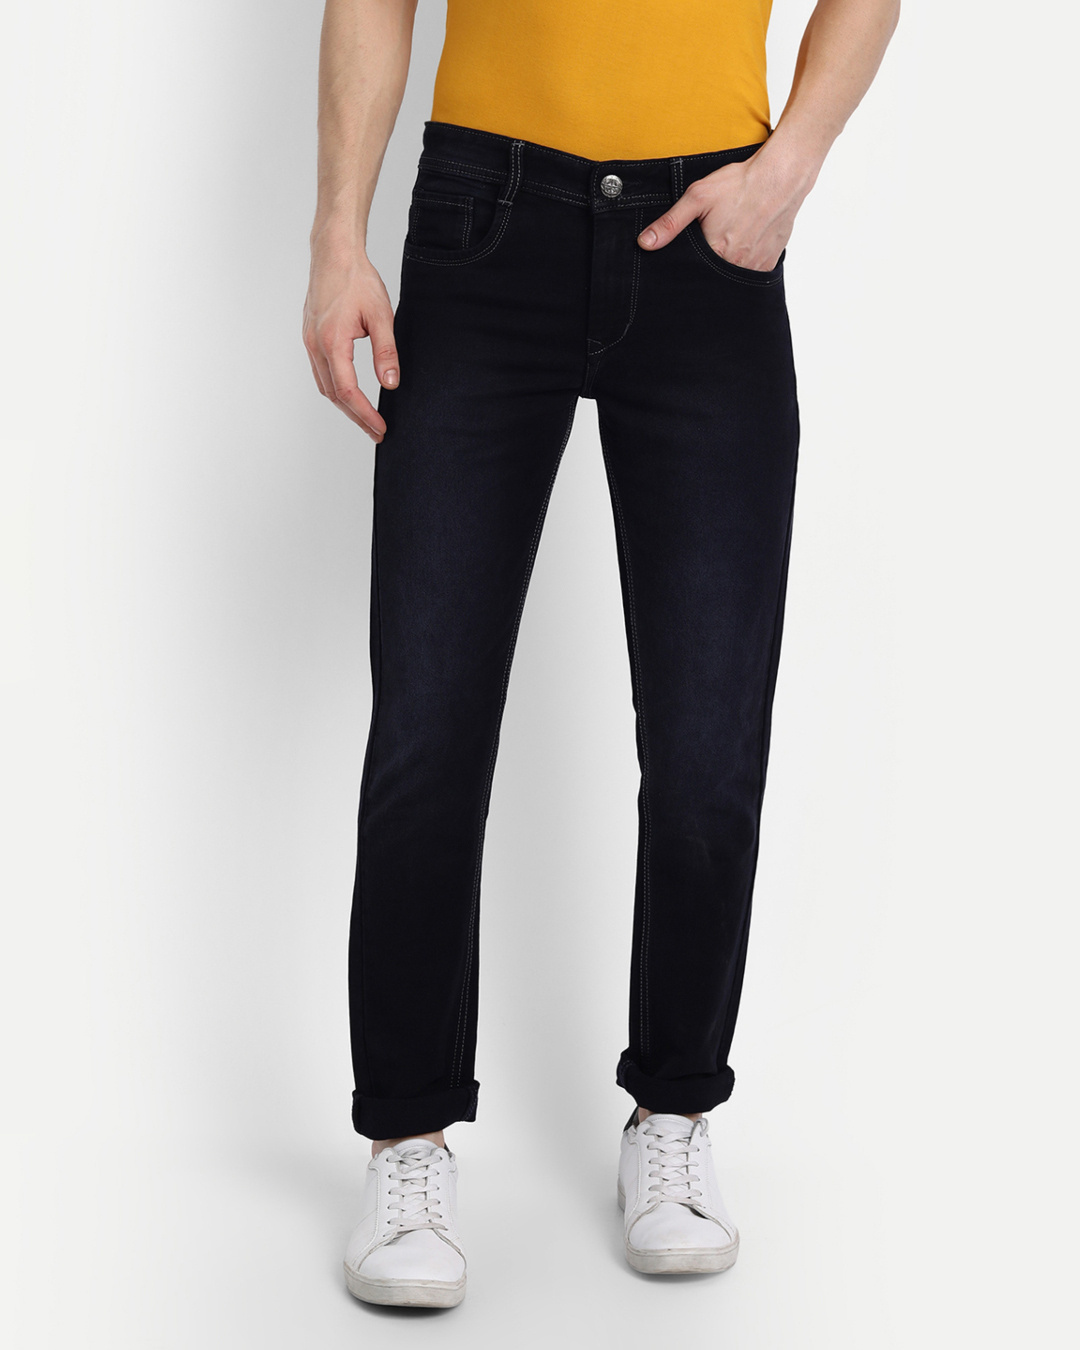 Buy Mens Black Solid Slim Fit Denim Jeans Online At Bewakoof 0706